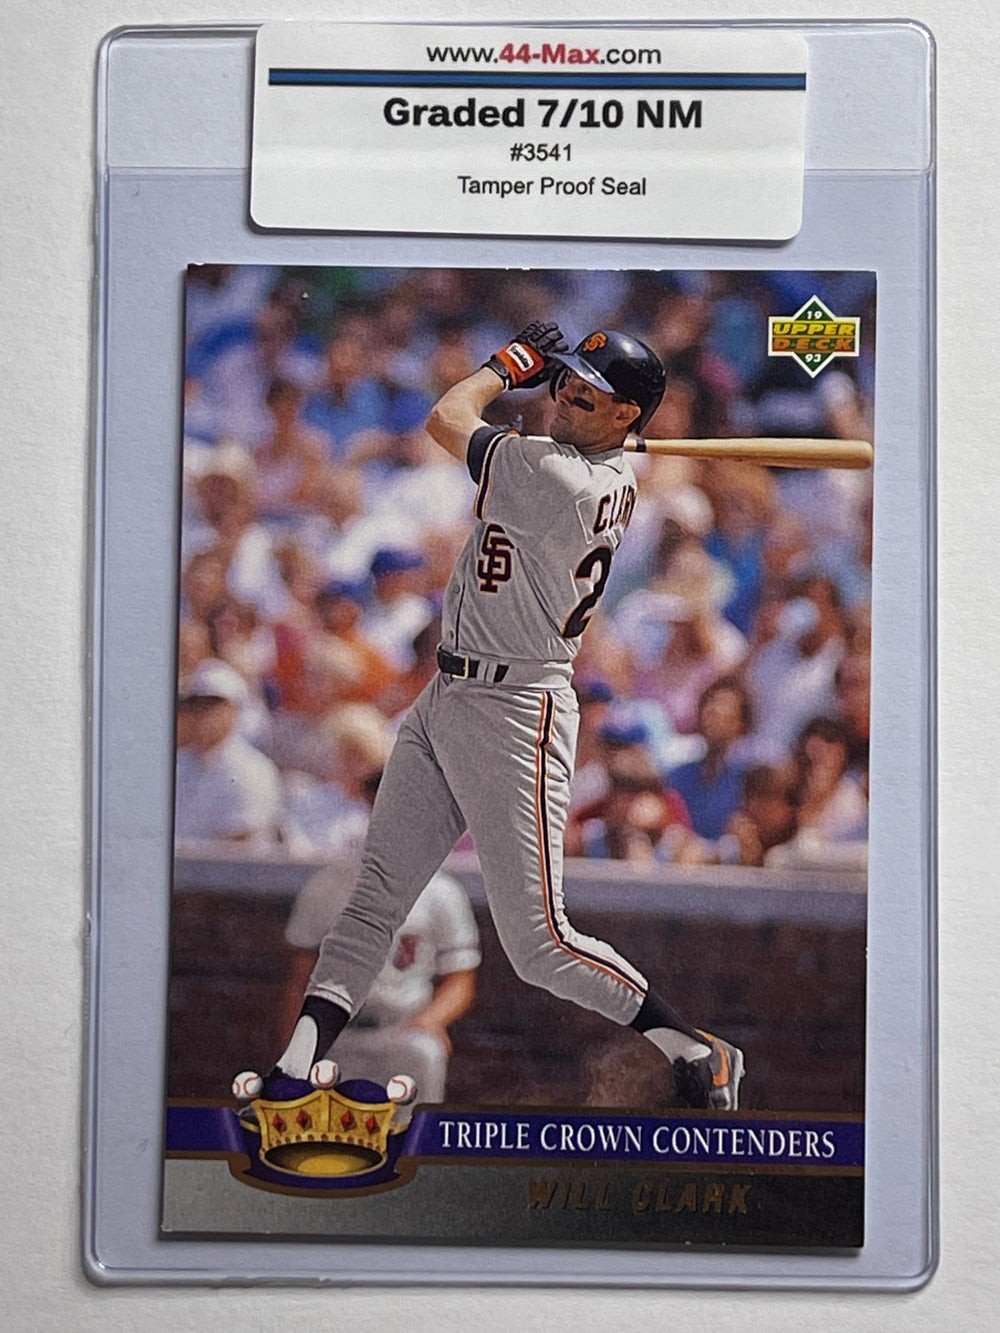 Wil Clark 1993 UD Insert Baseball Card. 44-Max 7/10 NM #3541